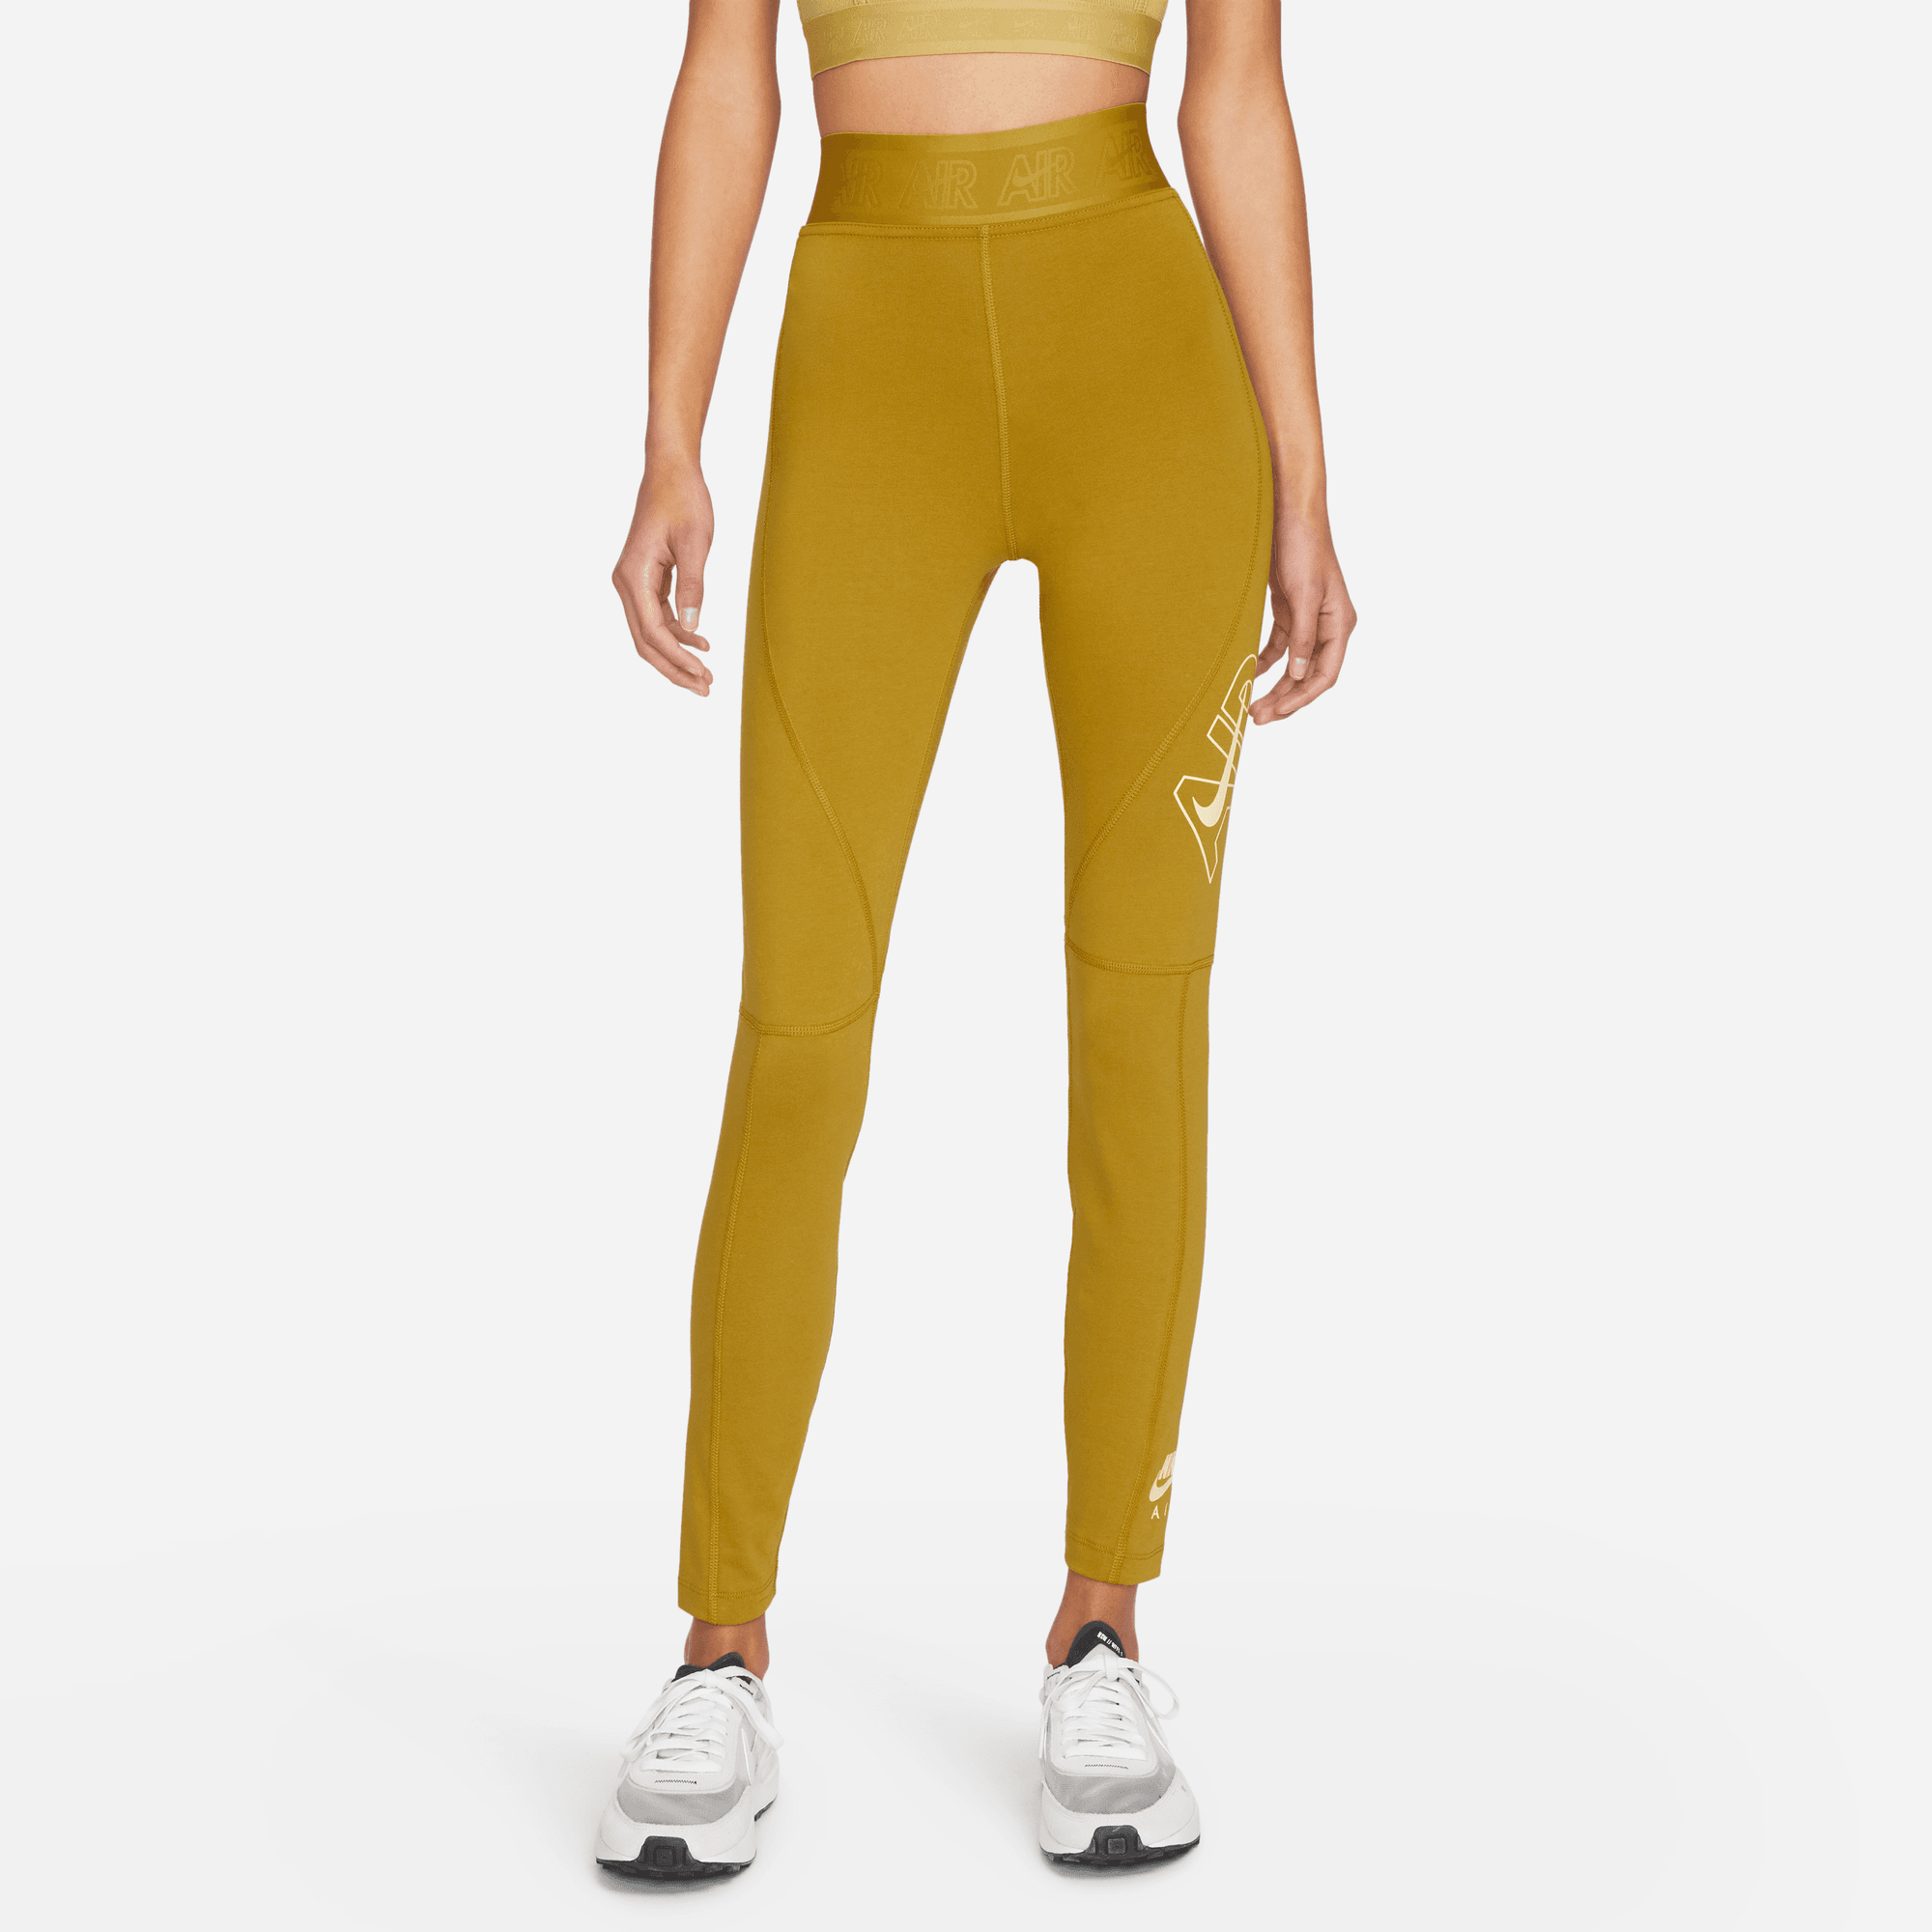 Nike High-Waisted Yellow Graphic Leggings – Puffer